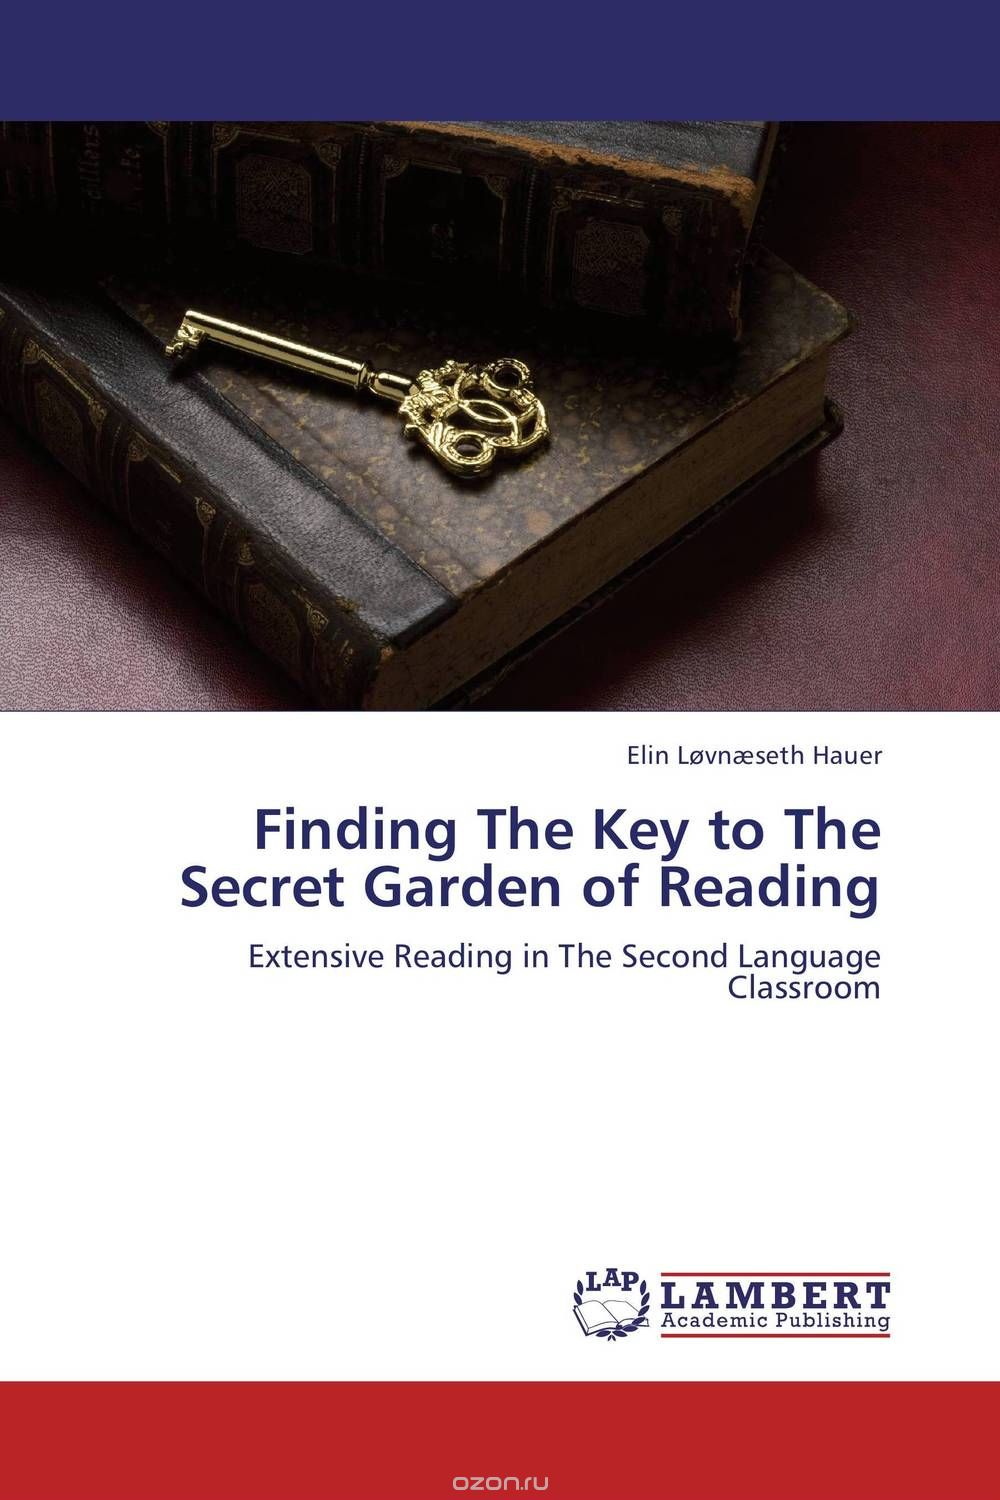 Скачать книгу "Finding The Key to The Secret Garden of Reading"